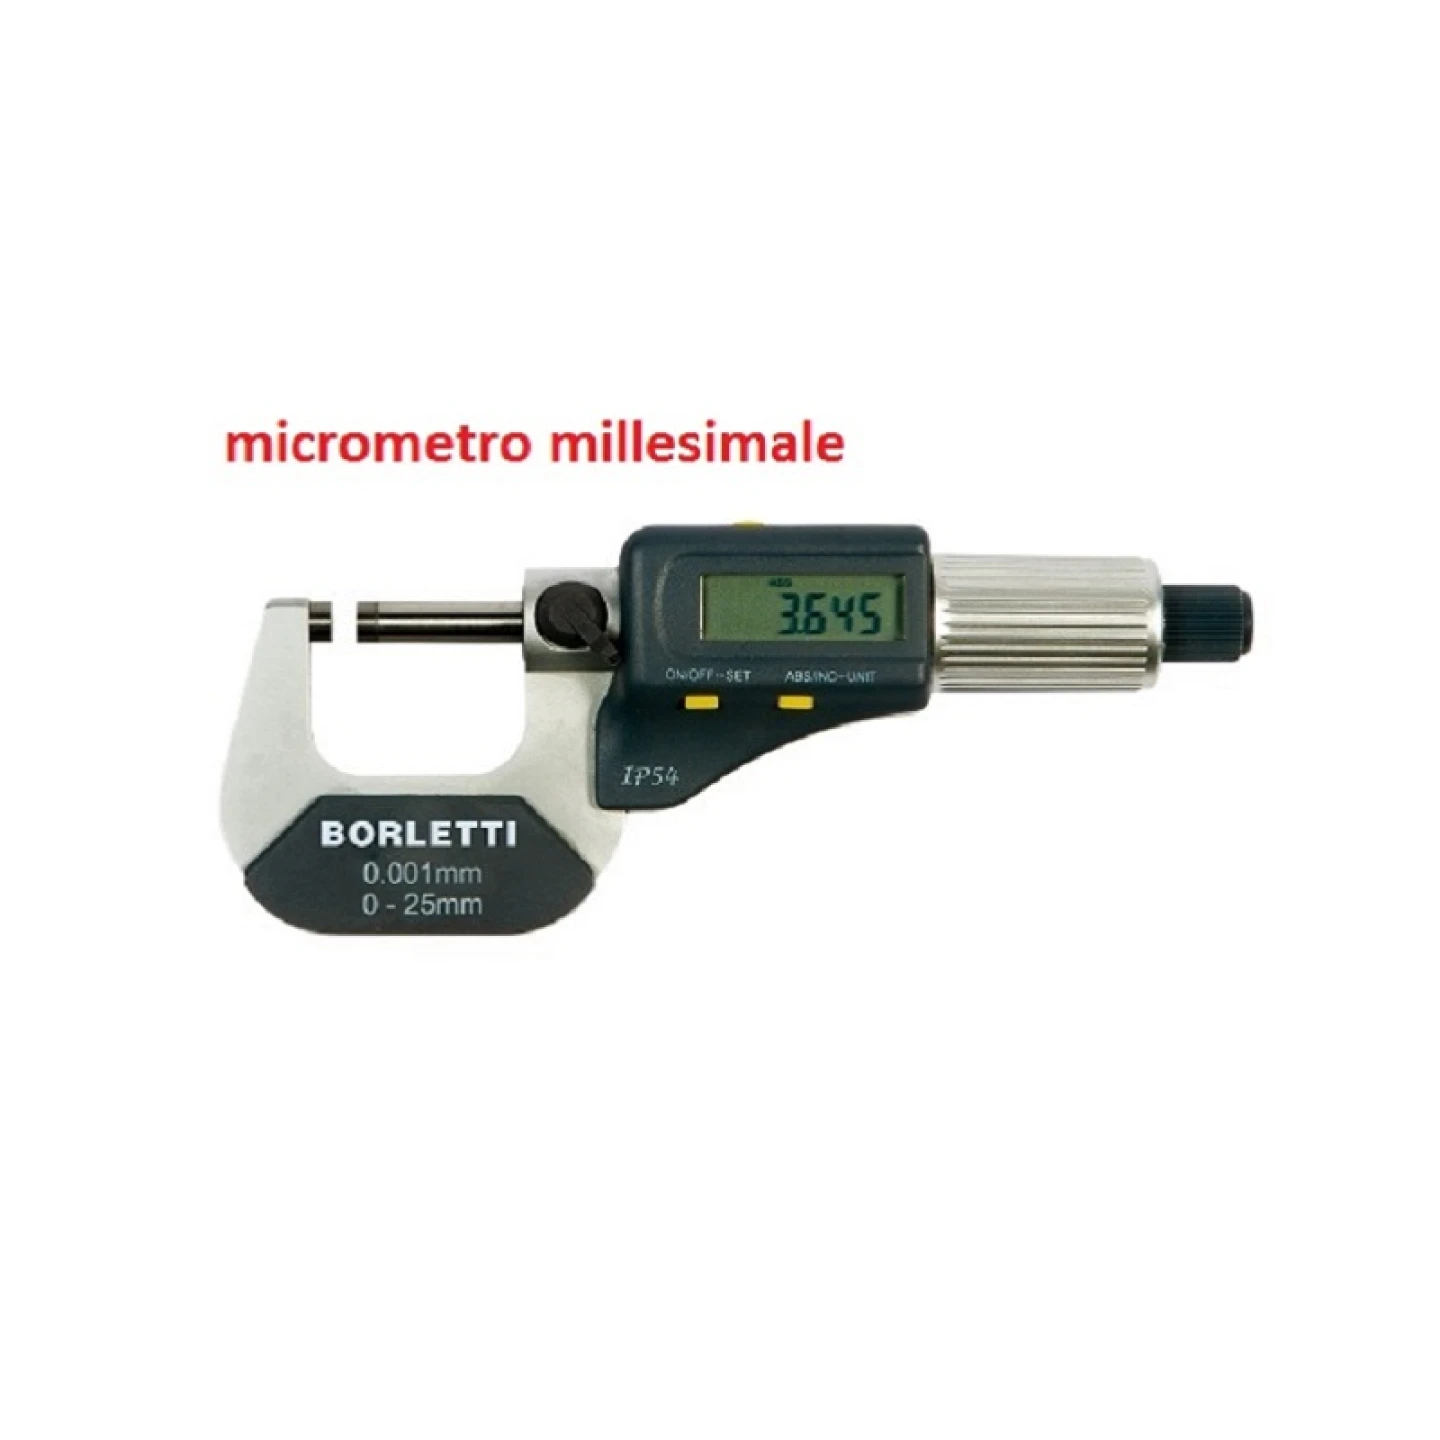 Micrometri digitali millesimali per esterni Borletti - Utensileria Revelli